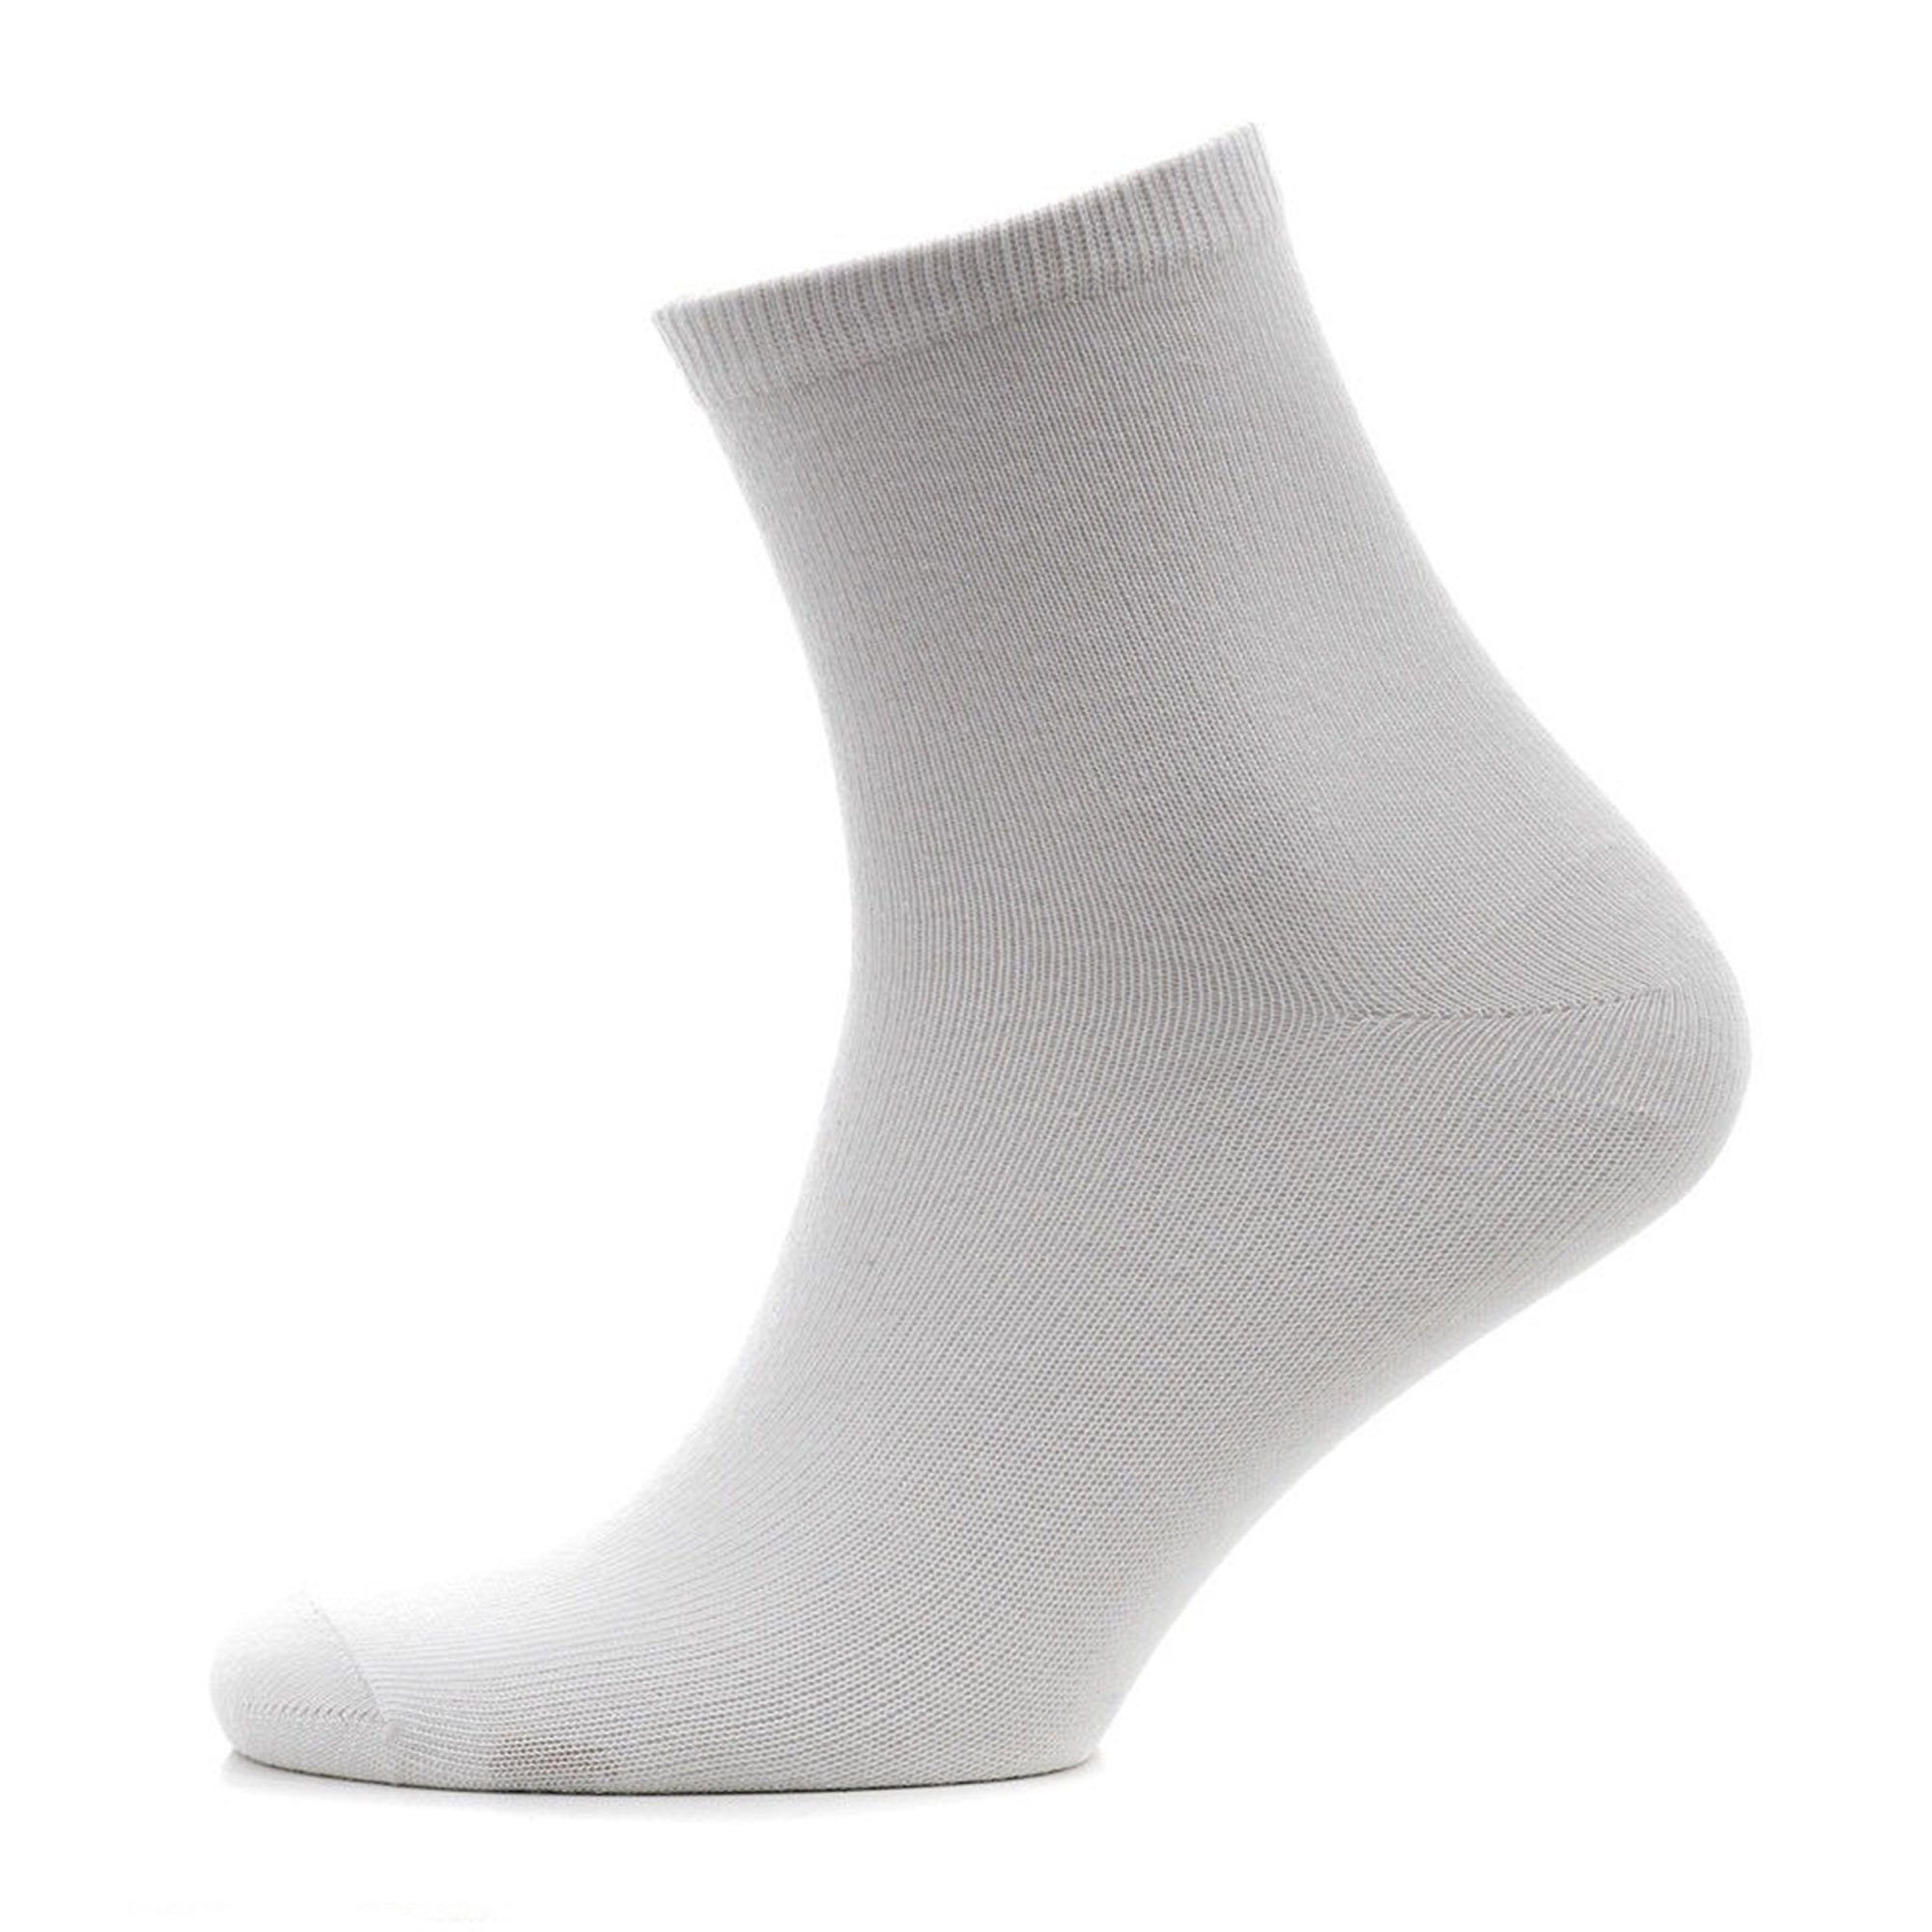 Носки Karmen Calza Look bianco M 38-40, цвет белый, размер 38-40 - фото 1